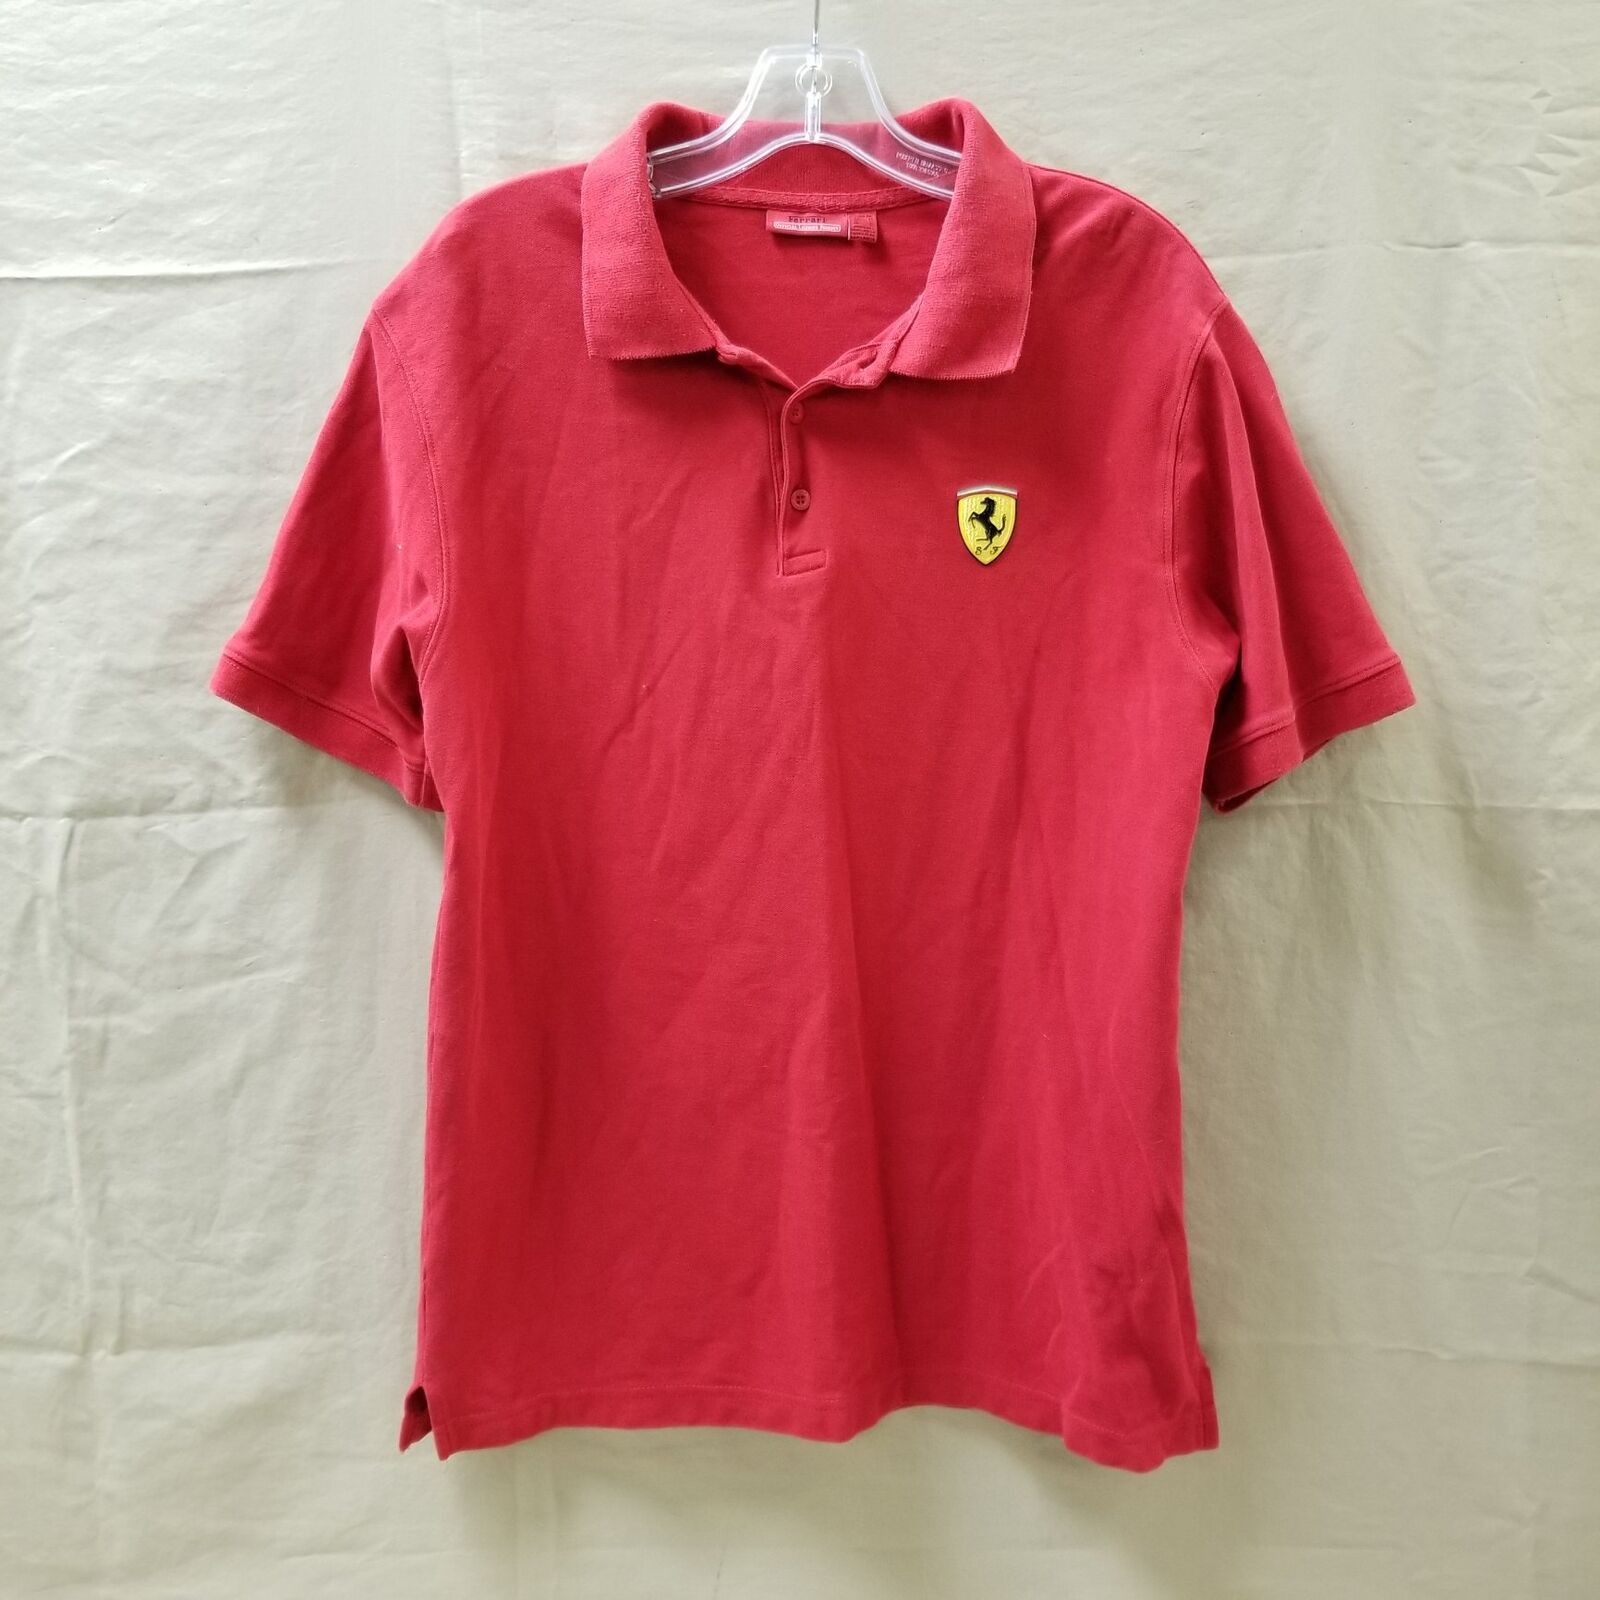 Official Ferrari Scuderia Red Embroidered Polo Short Sleeve Shirt Men's Sz M